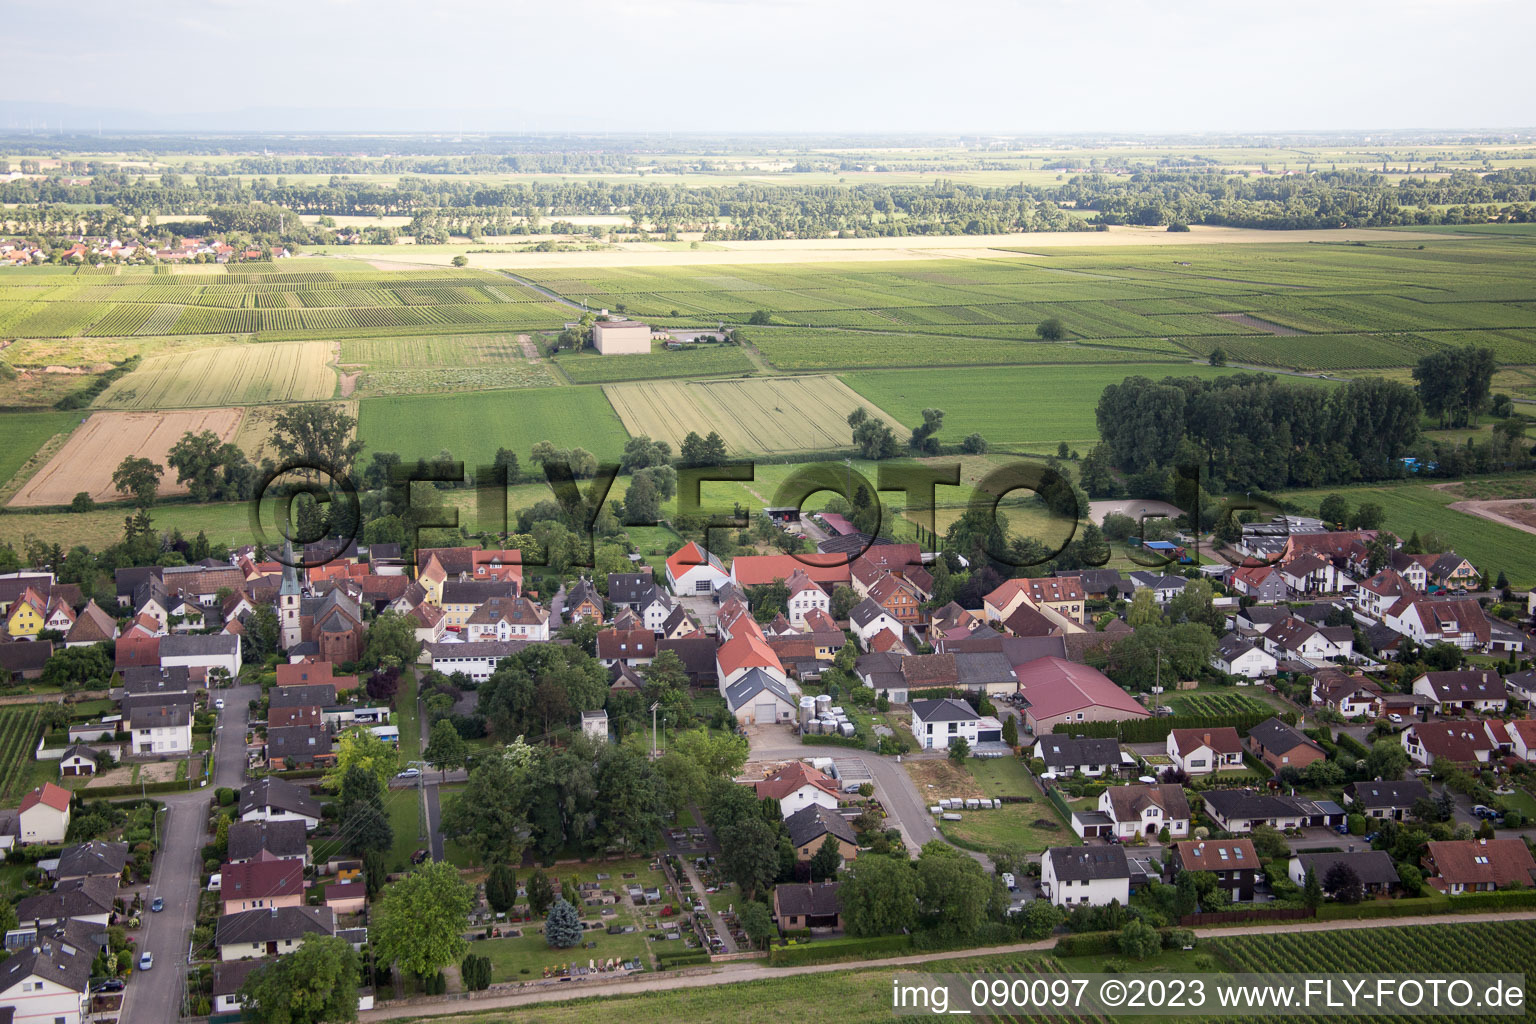 District Duttweiler in Neustadt an der Weinstraße in the state Rhineland-Palatinate, Germany viewn from the air